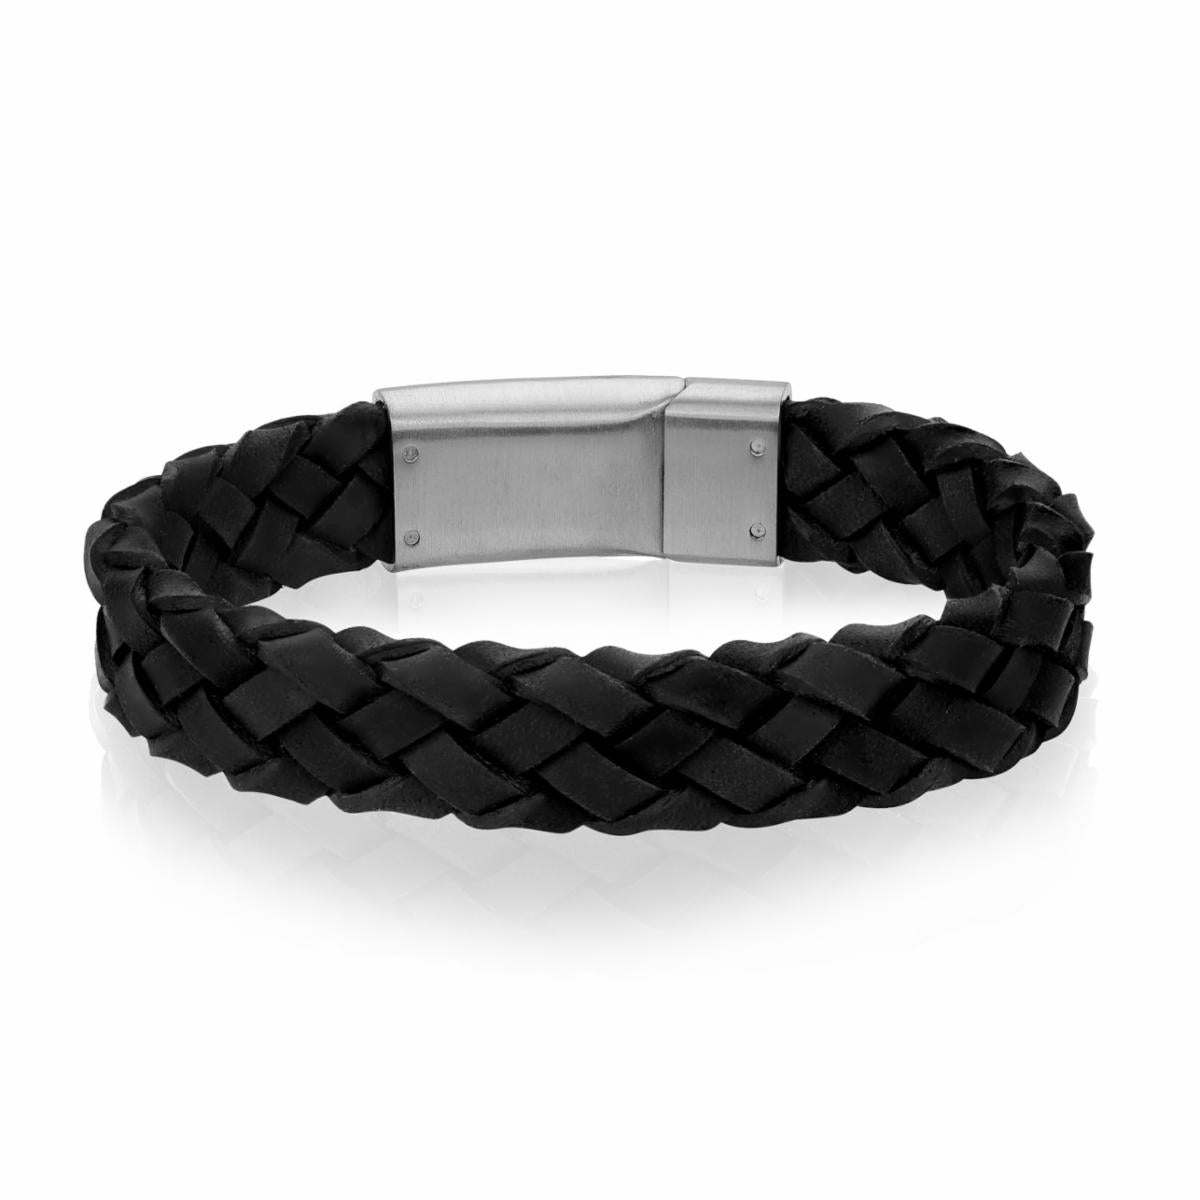 Italian Leather Bracelet Black